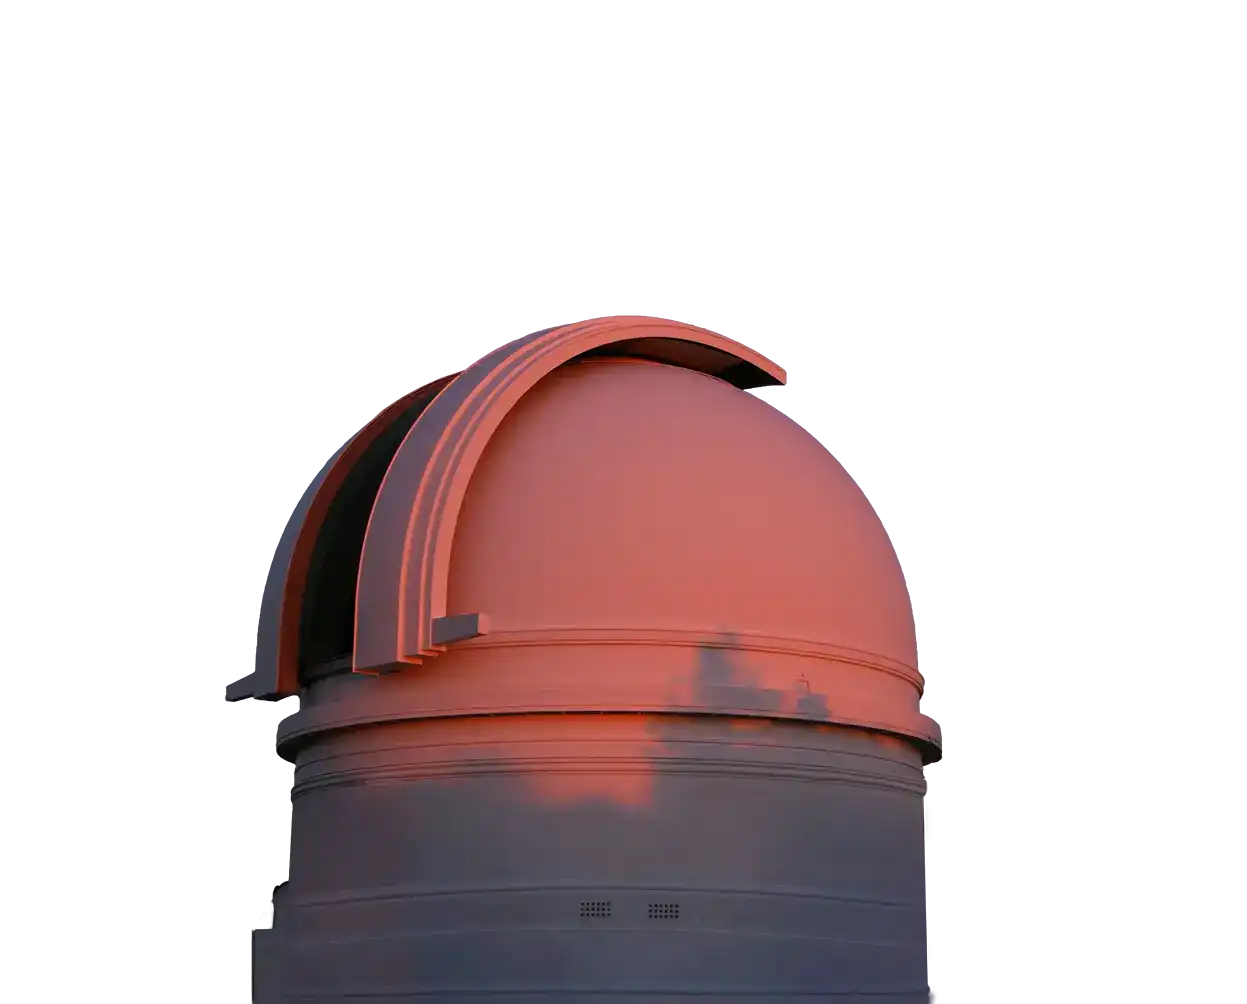 Hale observatory